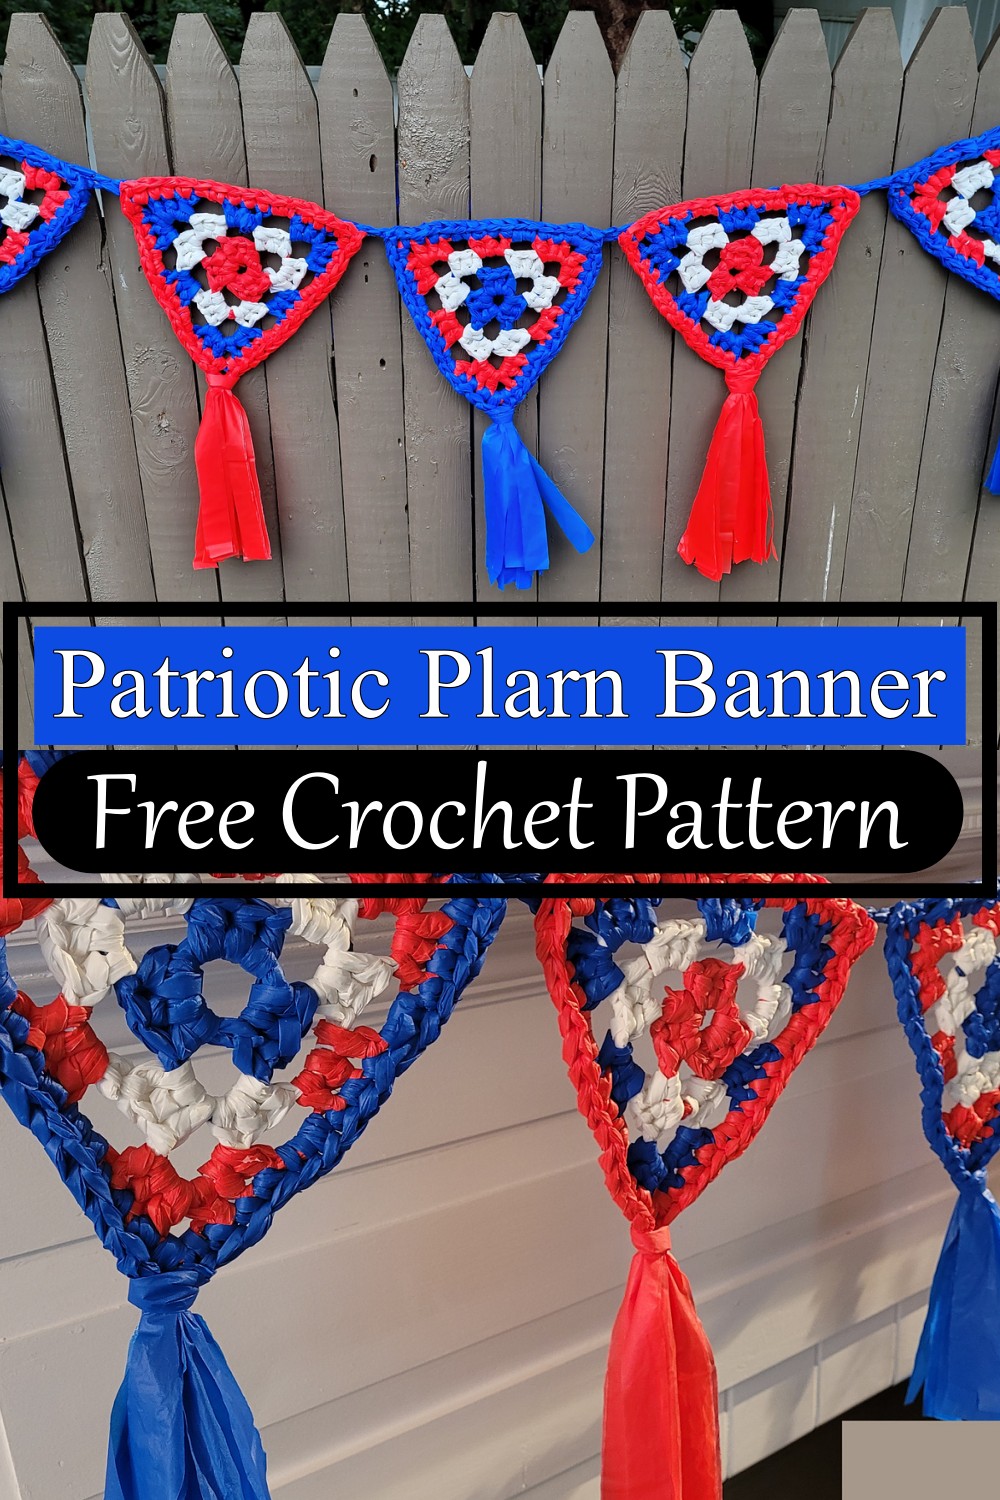 Patriotic Plarn Banner